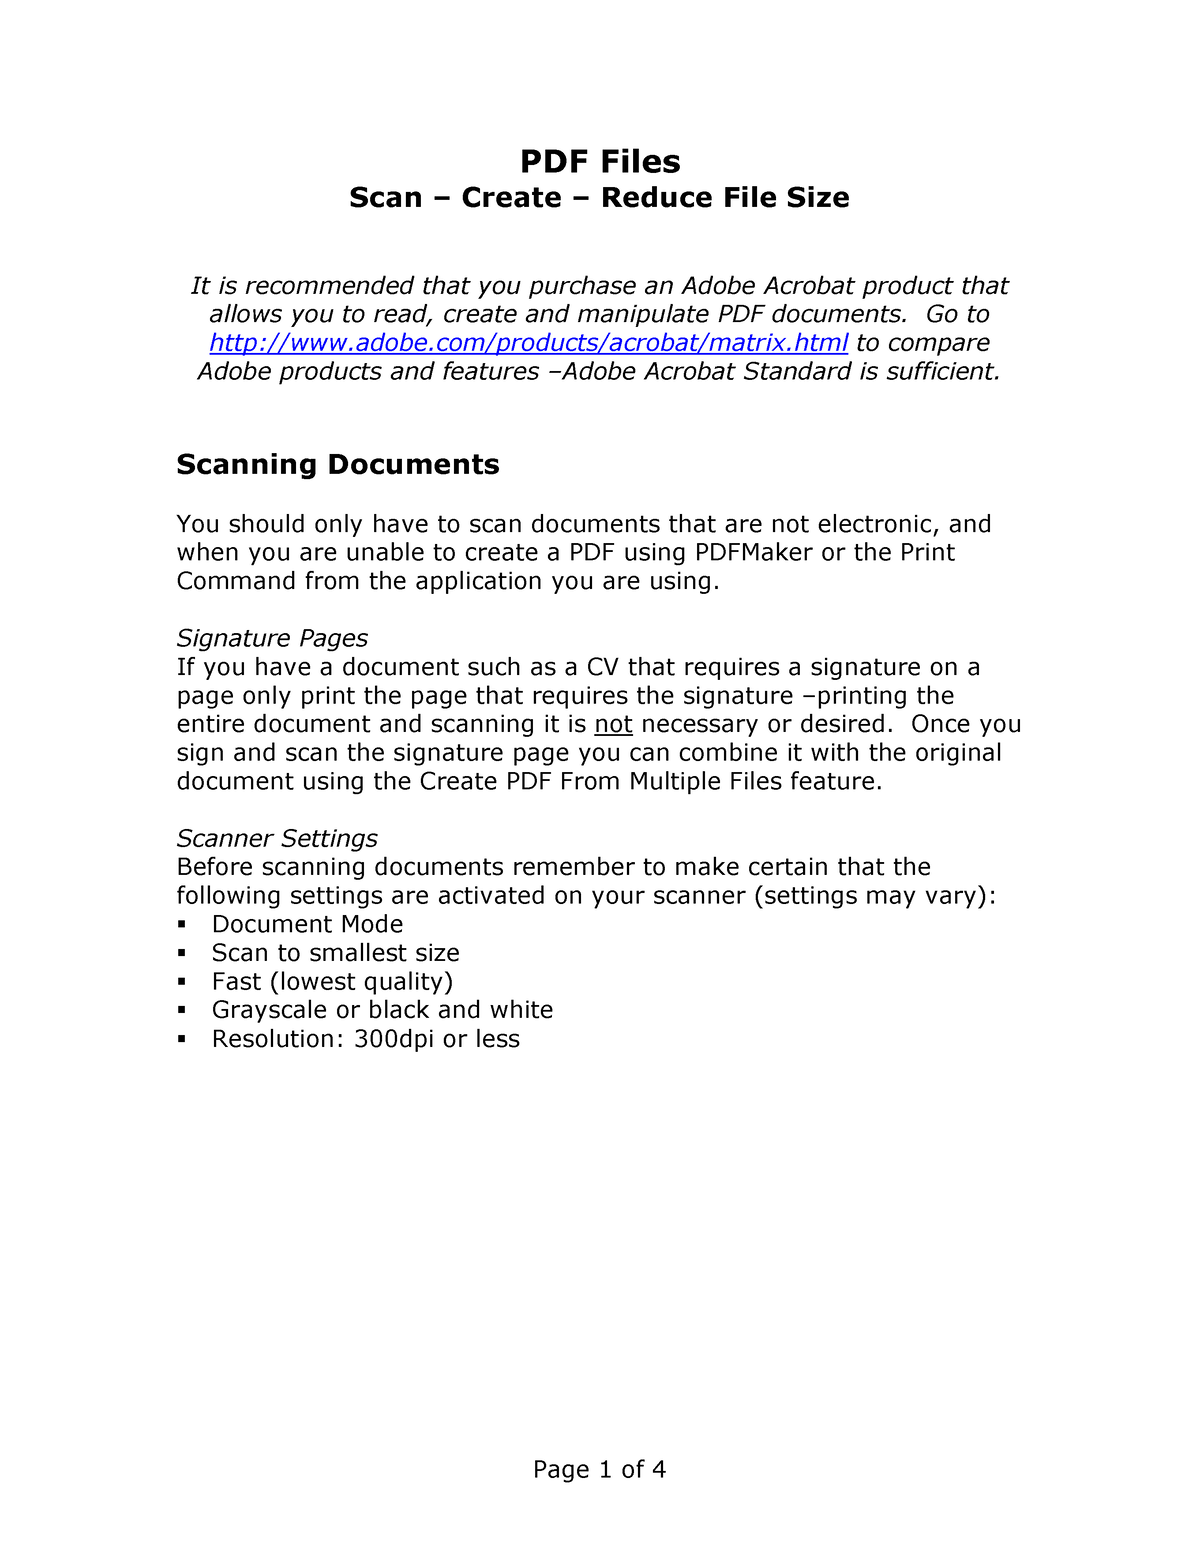 pdf-files-scan-create-reducefilesize-pdf-files-scan-create-reduce